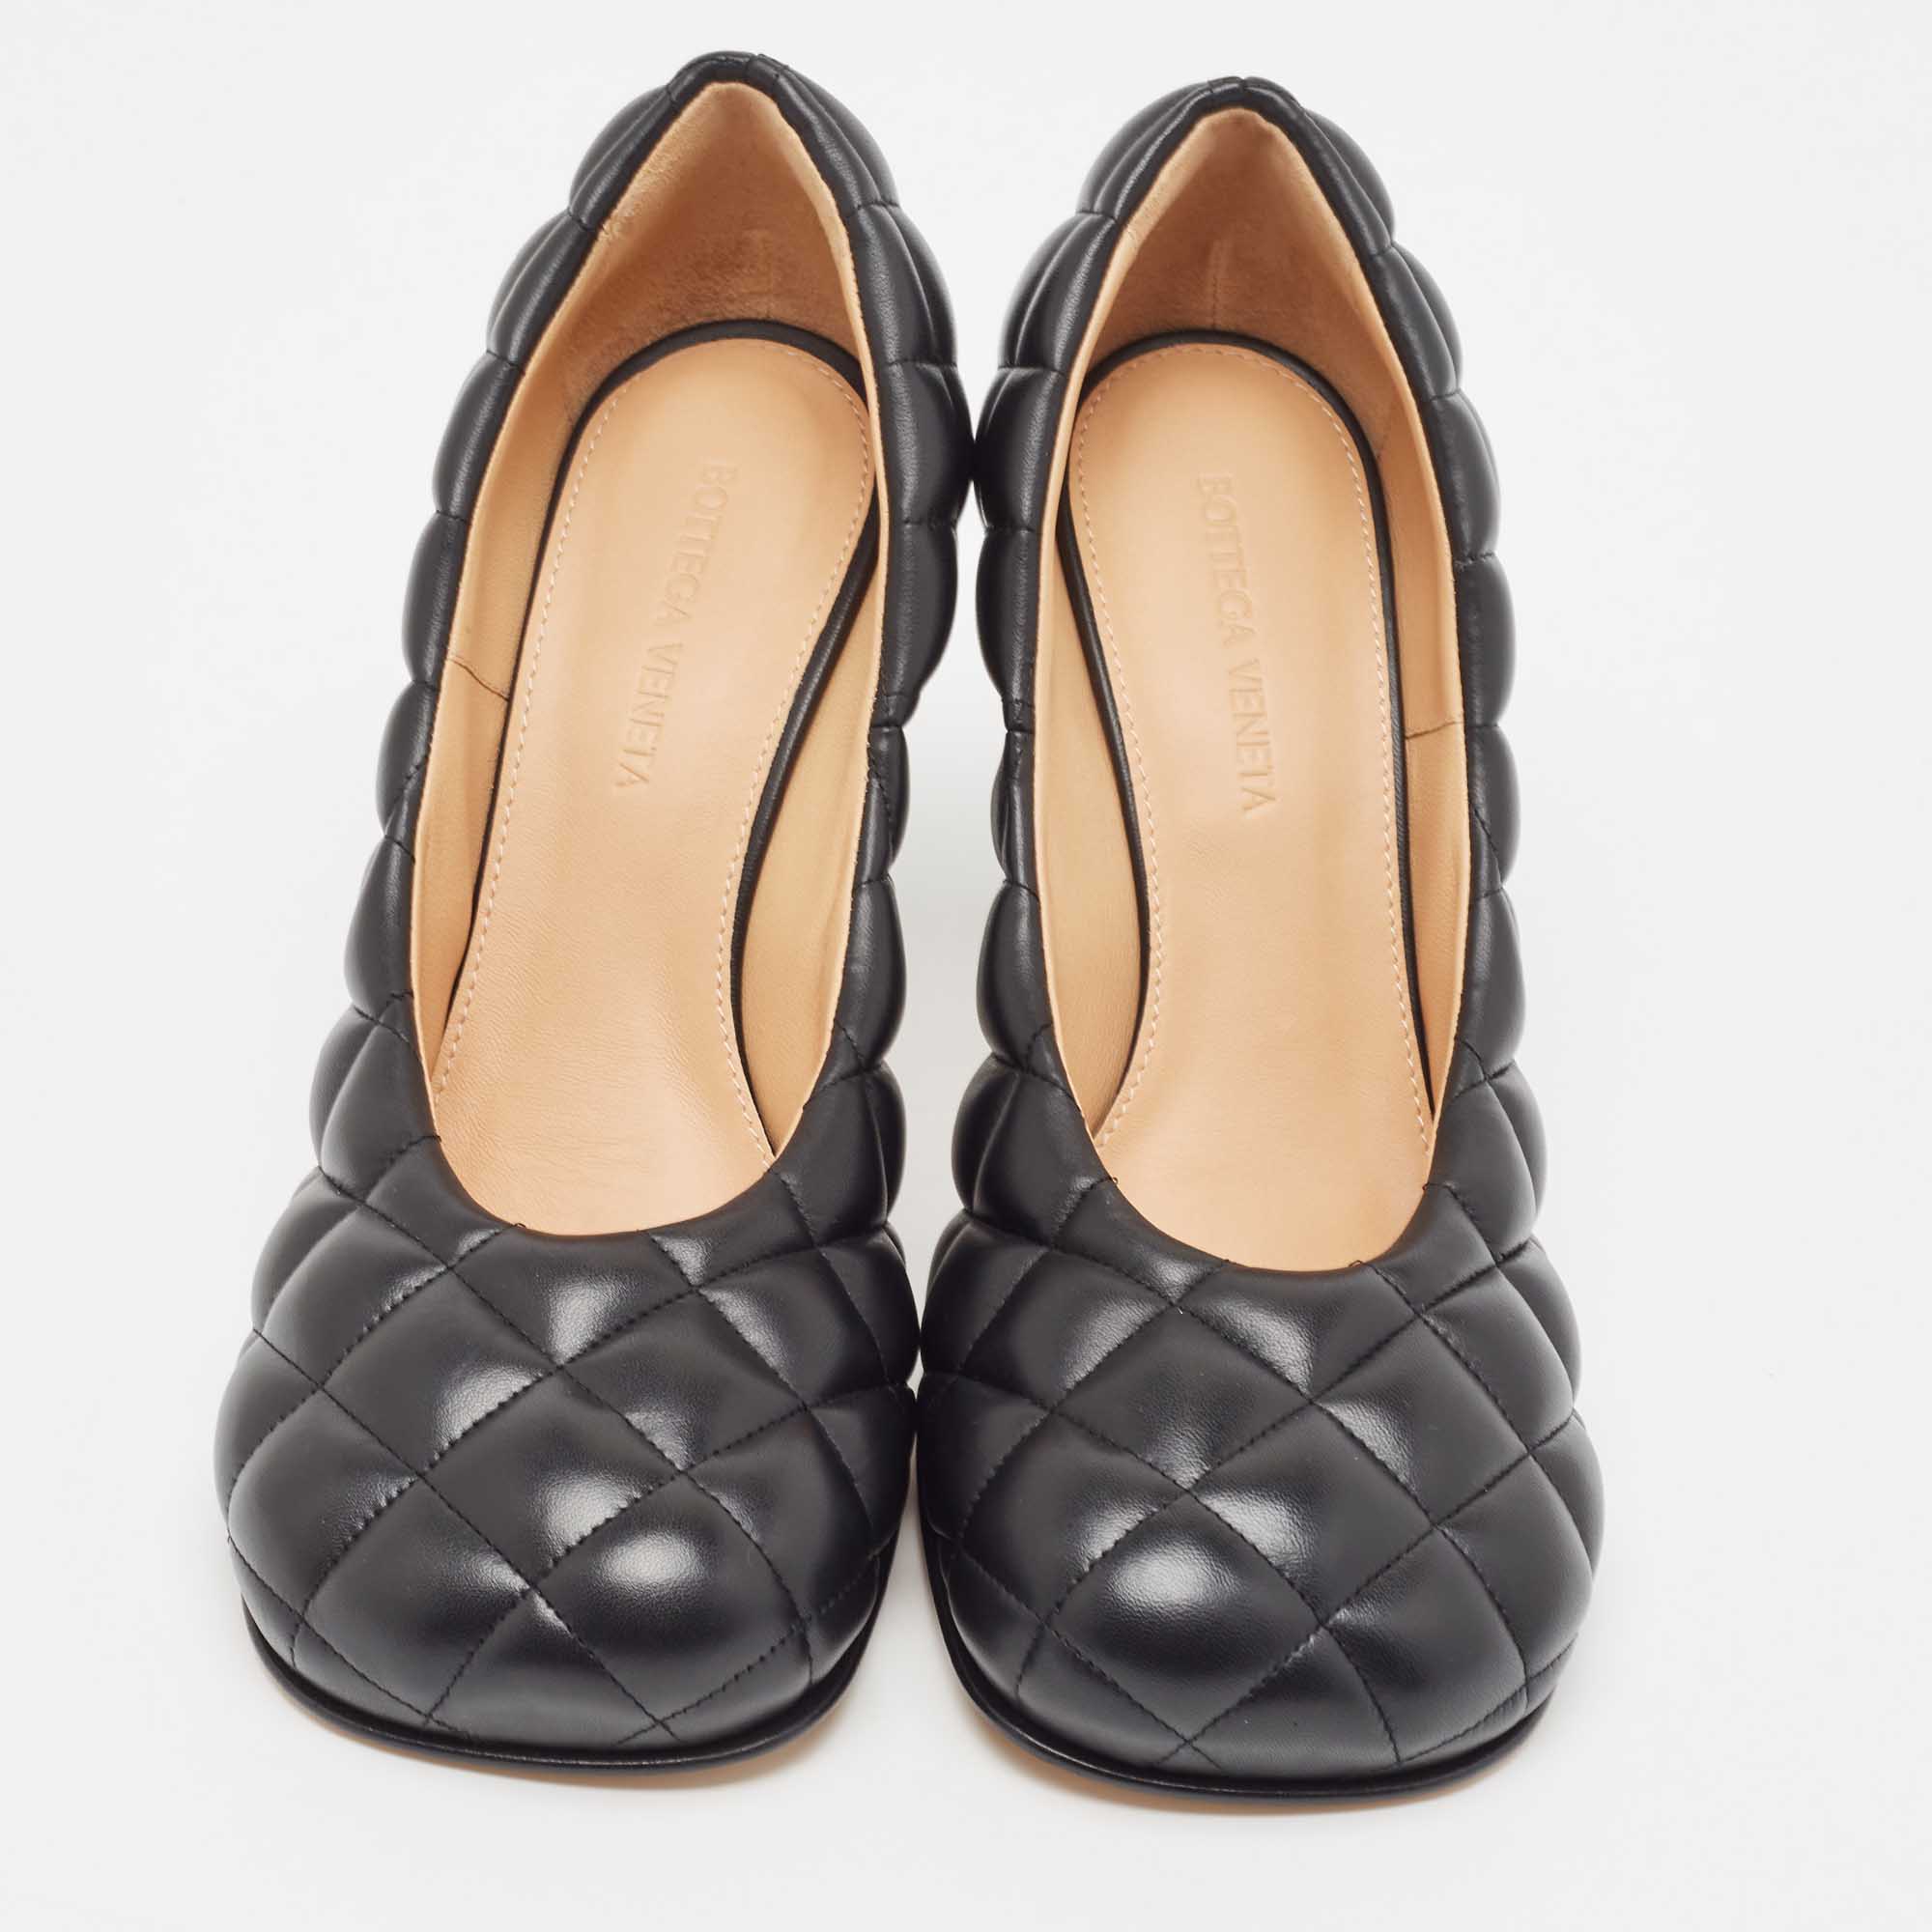 Bottega Veneta Black Quilted Leather Square Toe Pumps Size 38.5